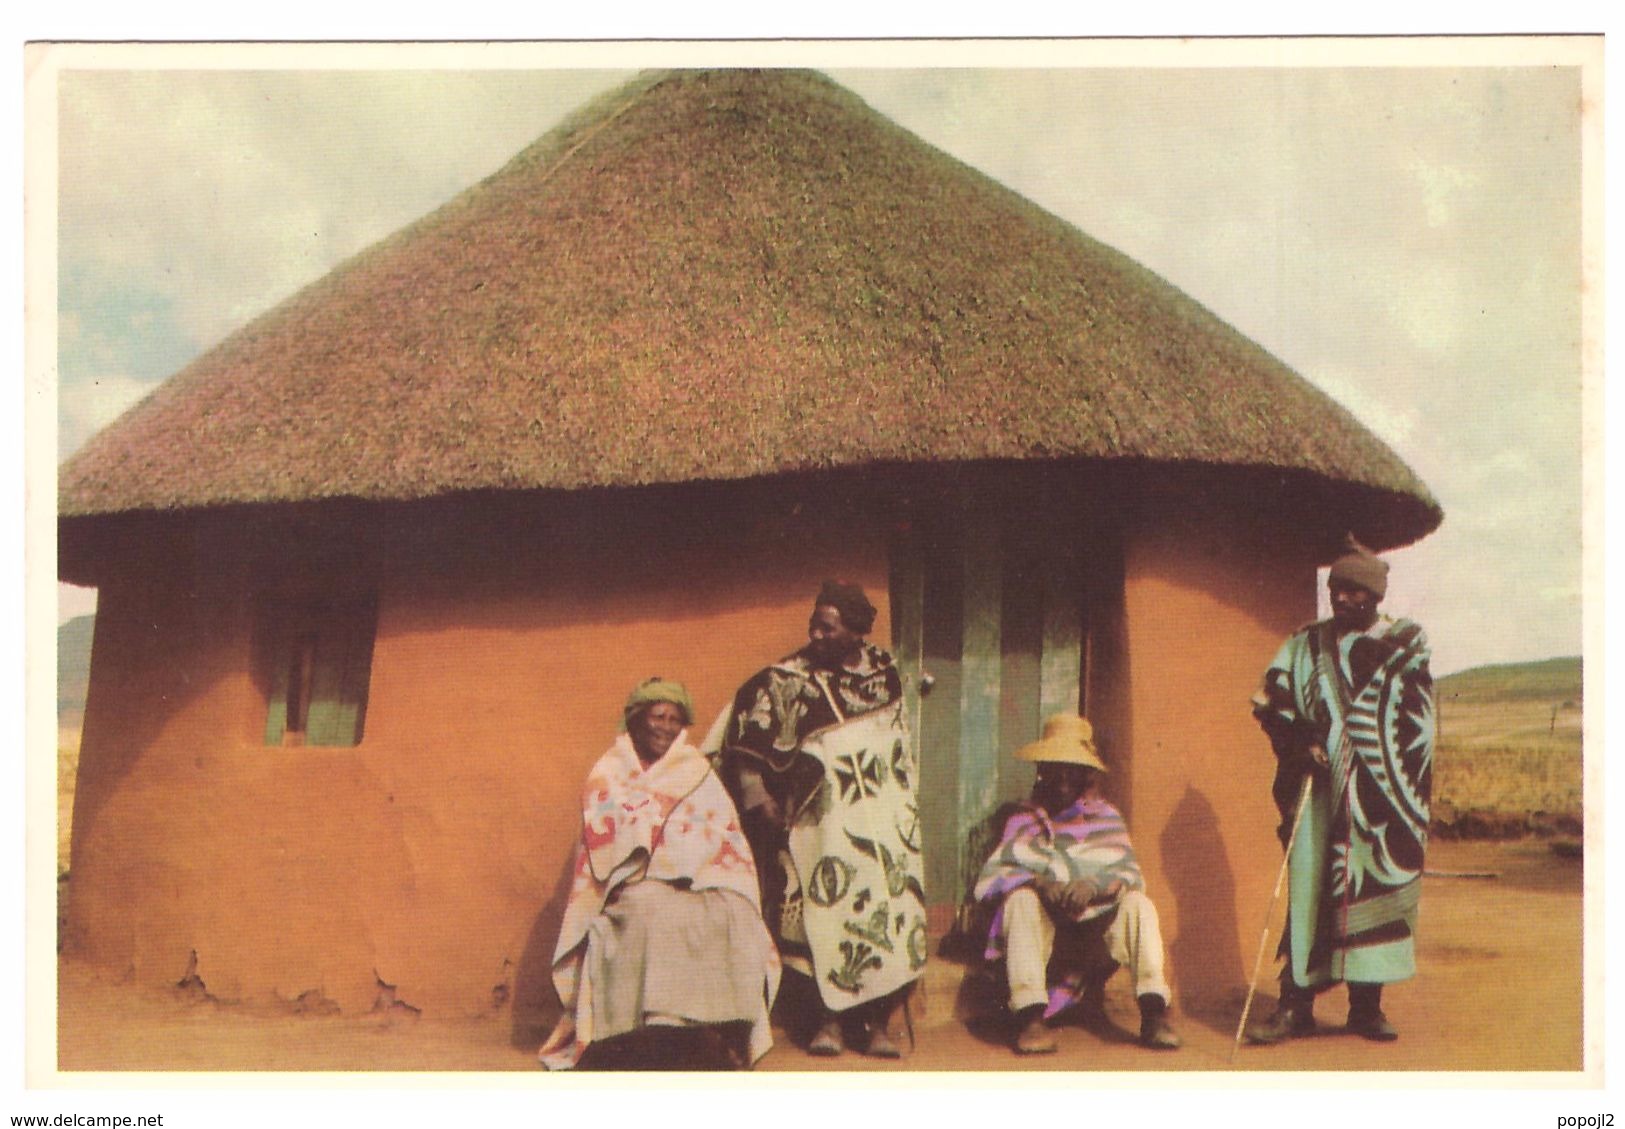 18 CPM AFRIQUE DU SUD - Zulu, Bantu, Ndebele toutes scannées